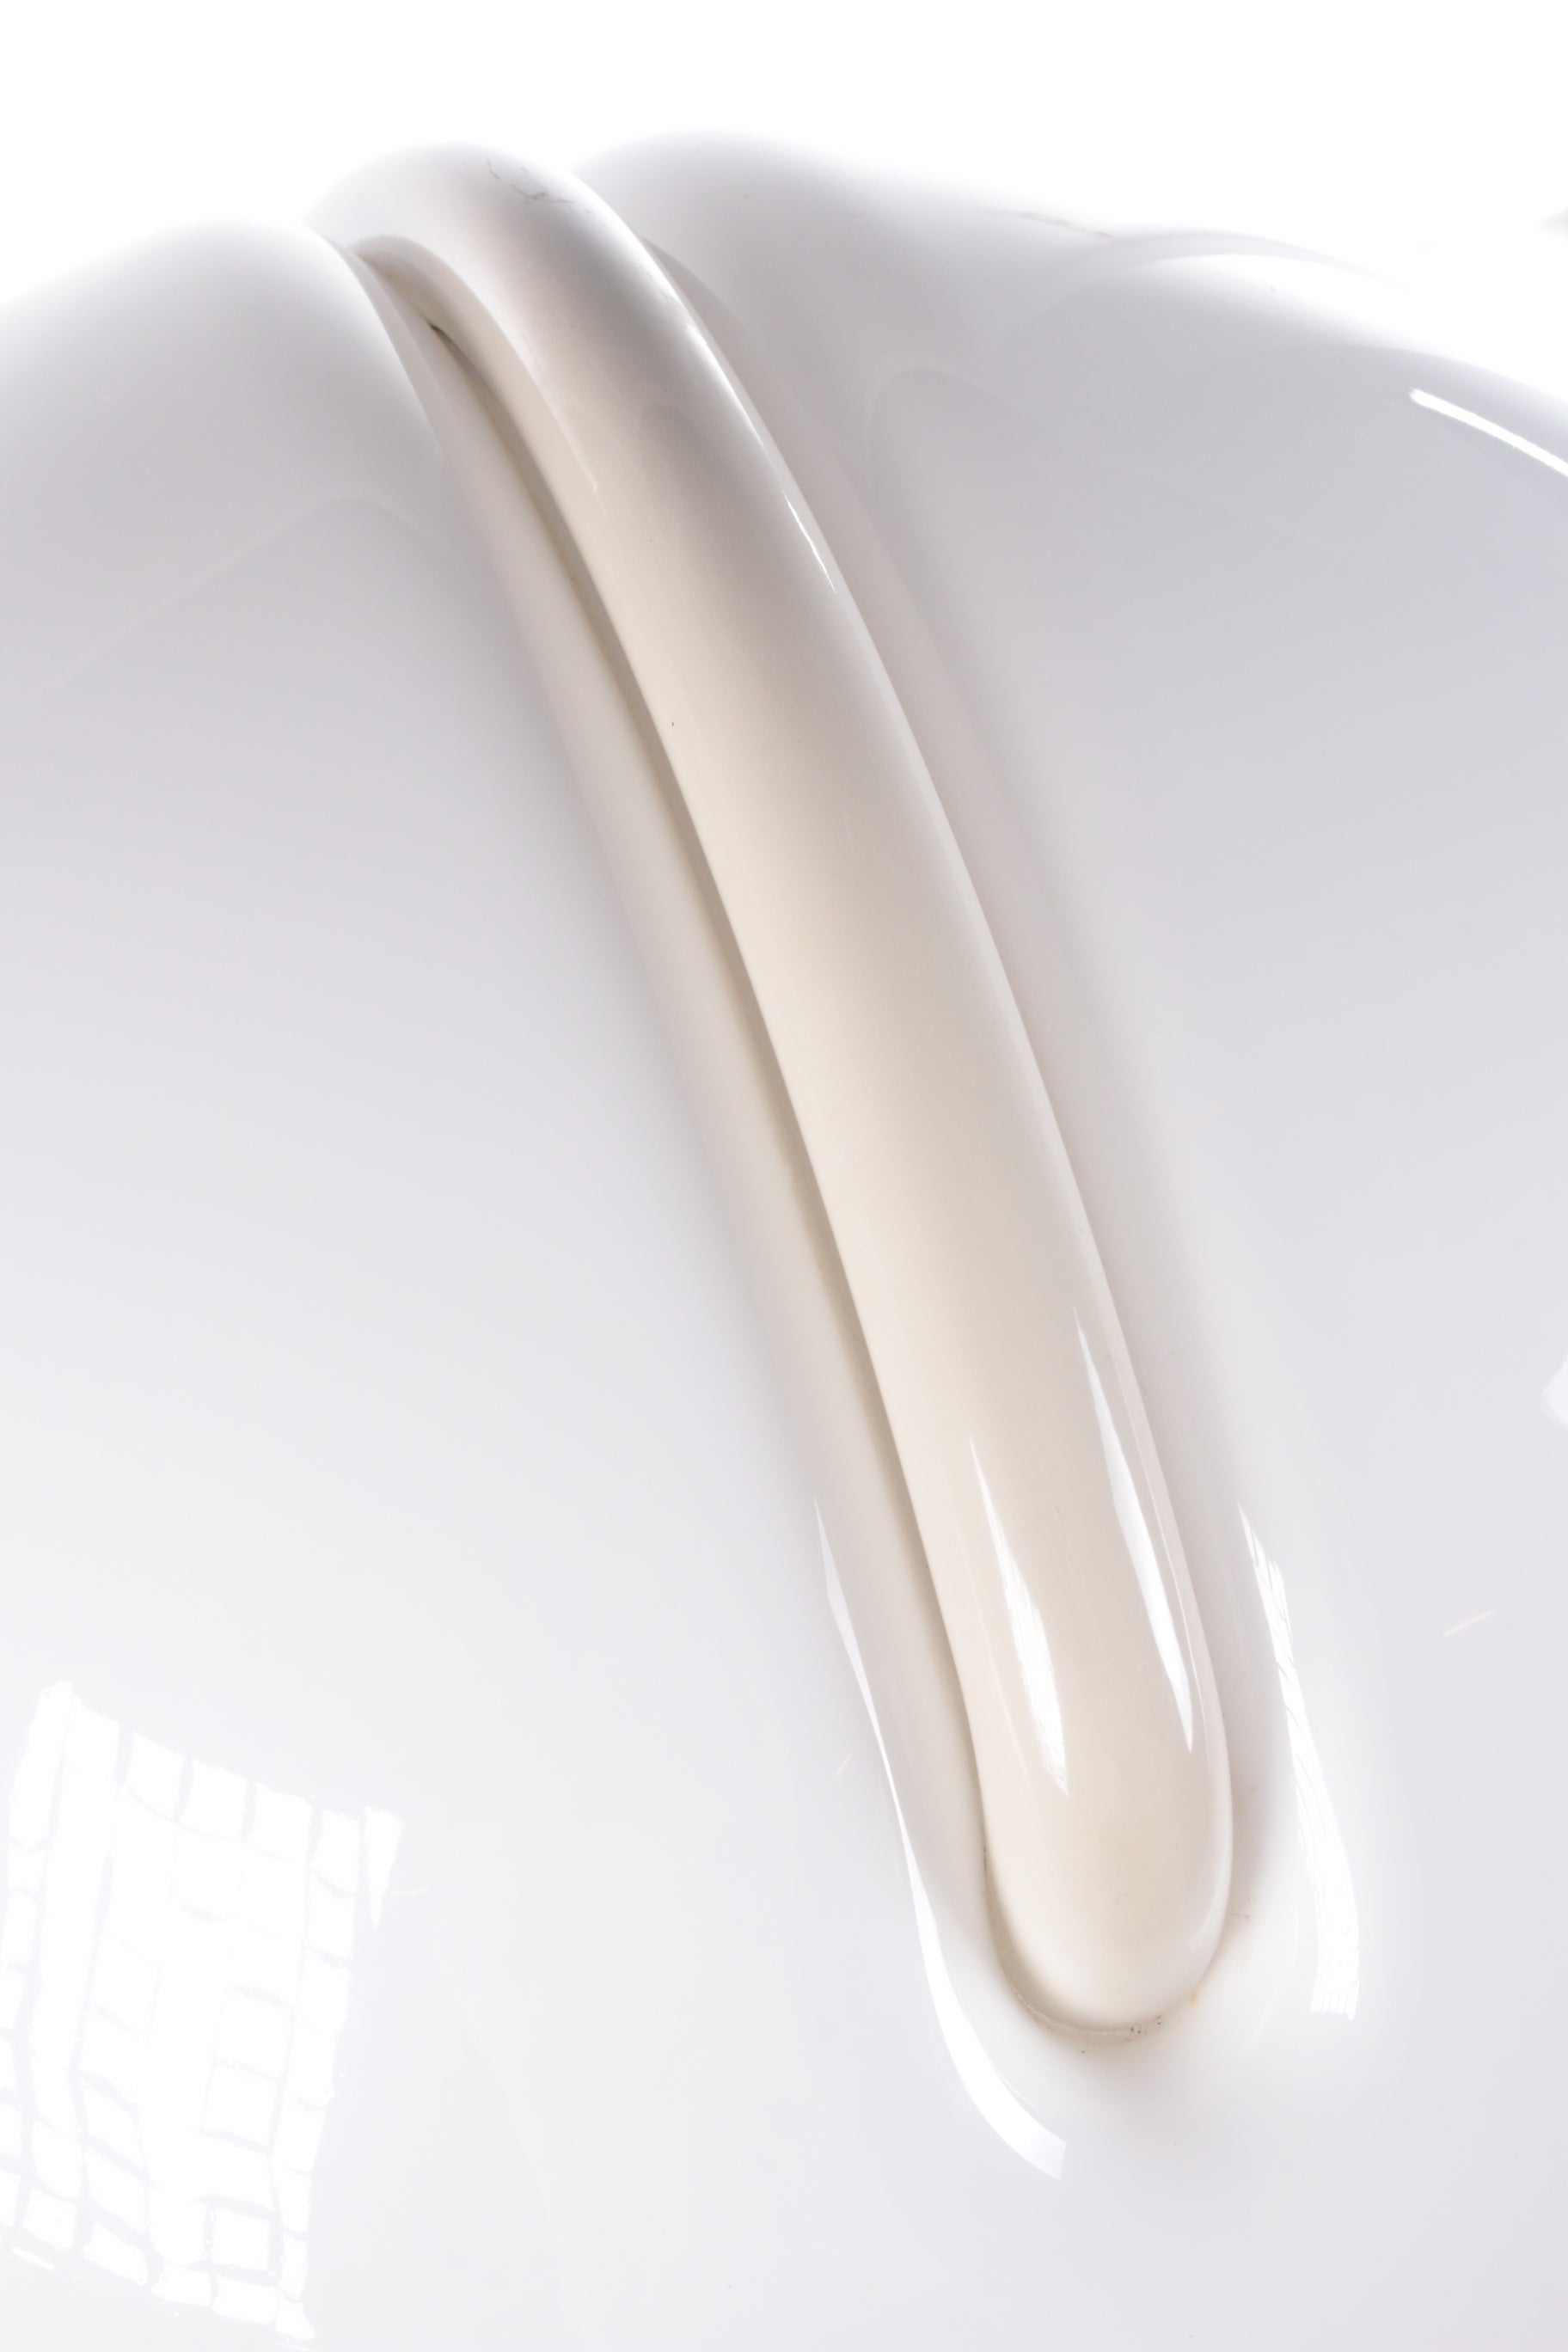 Witte Serpente Vloerlamp van Elio Martinelli voor Martinelli Luce detail bovenkant lampekap